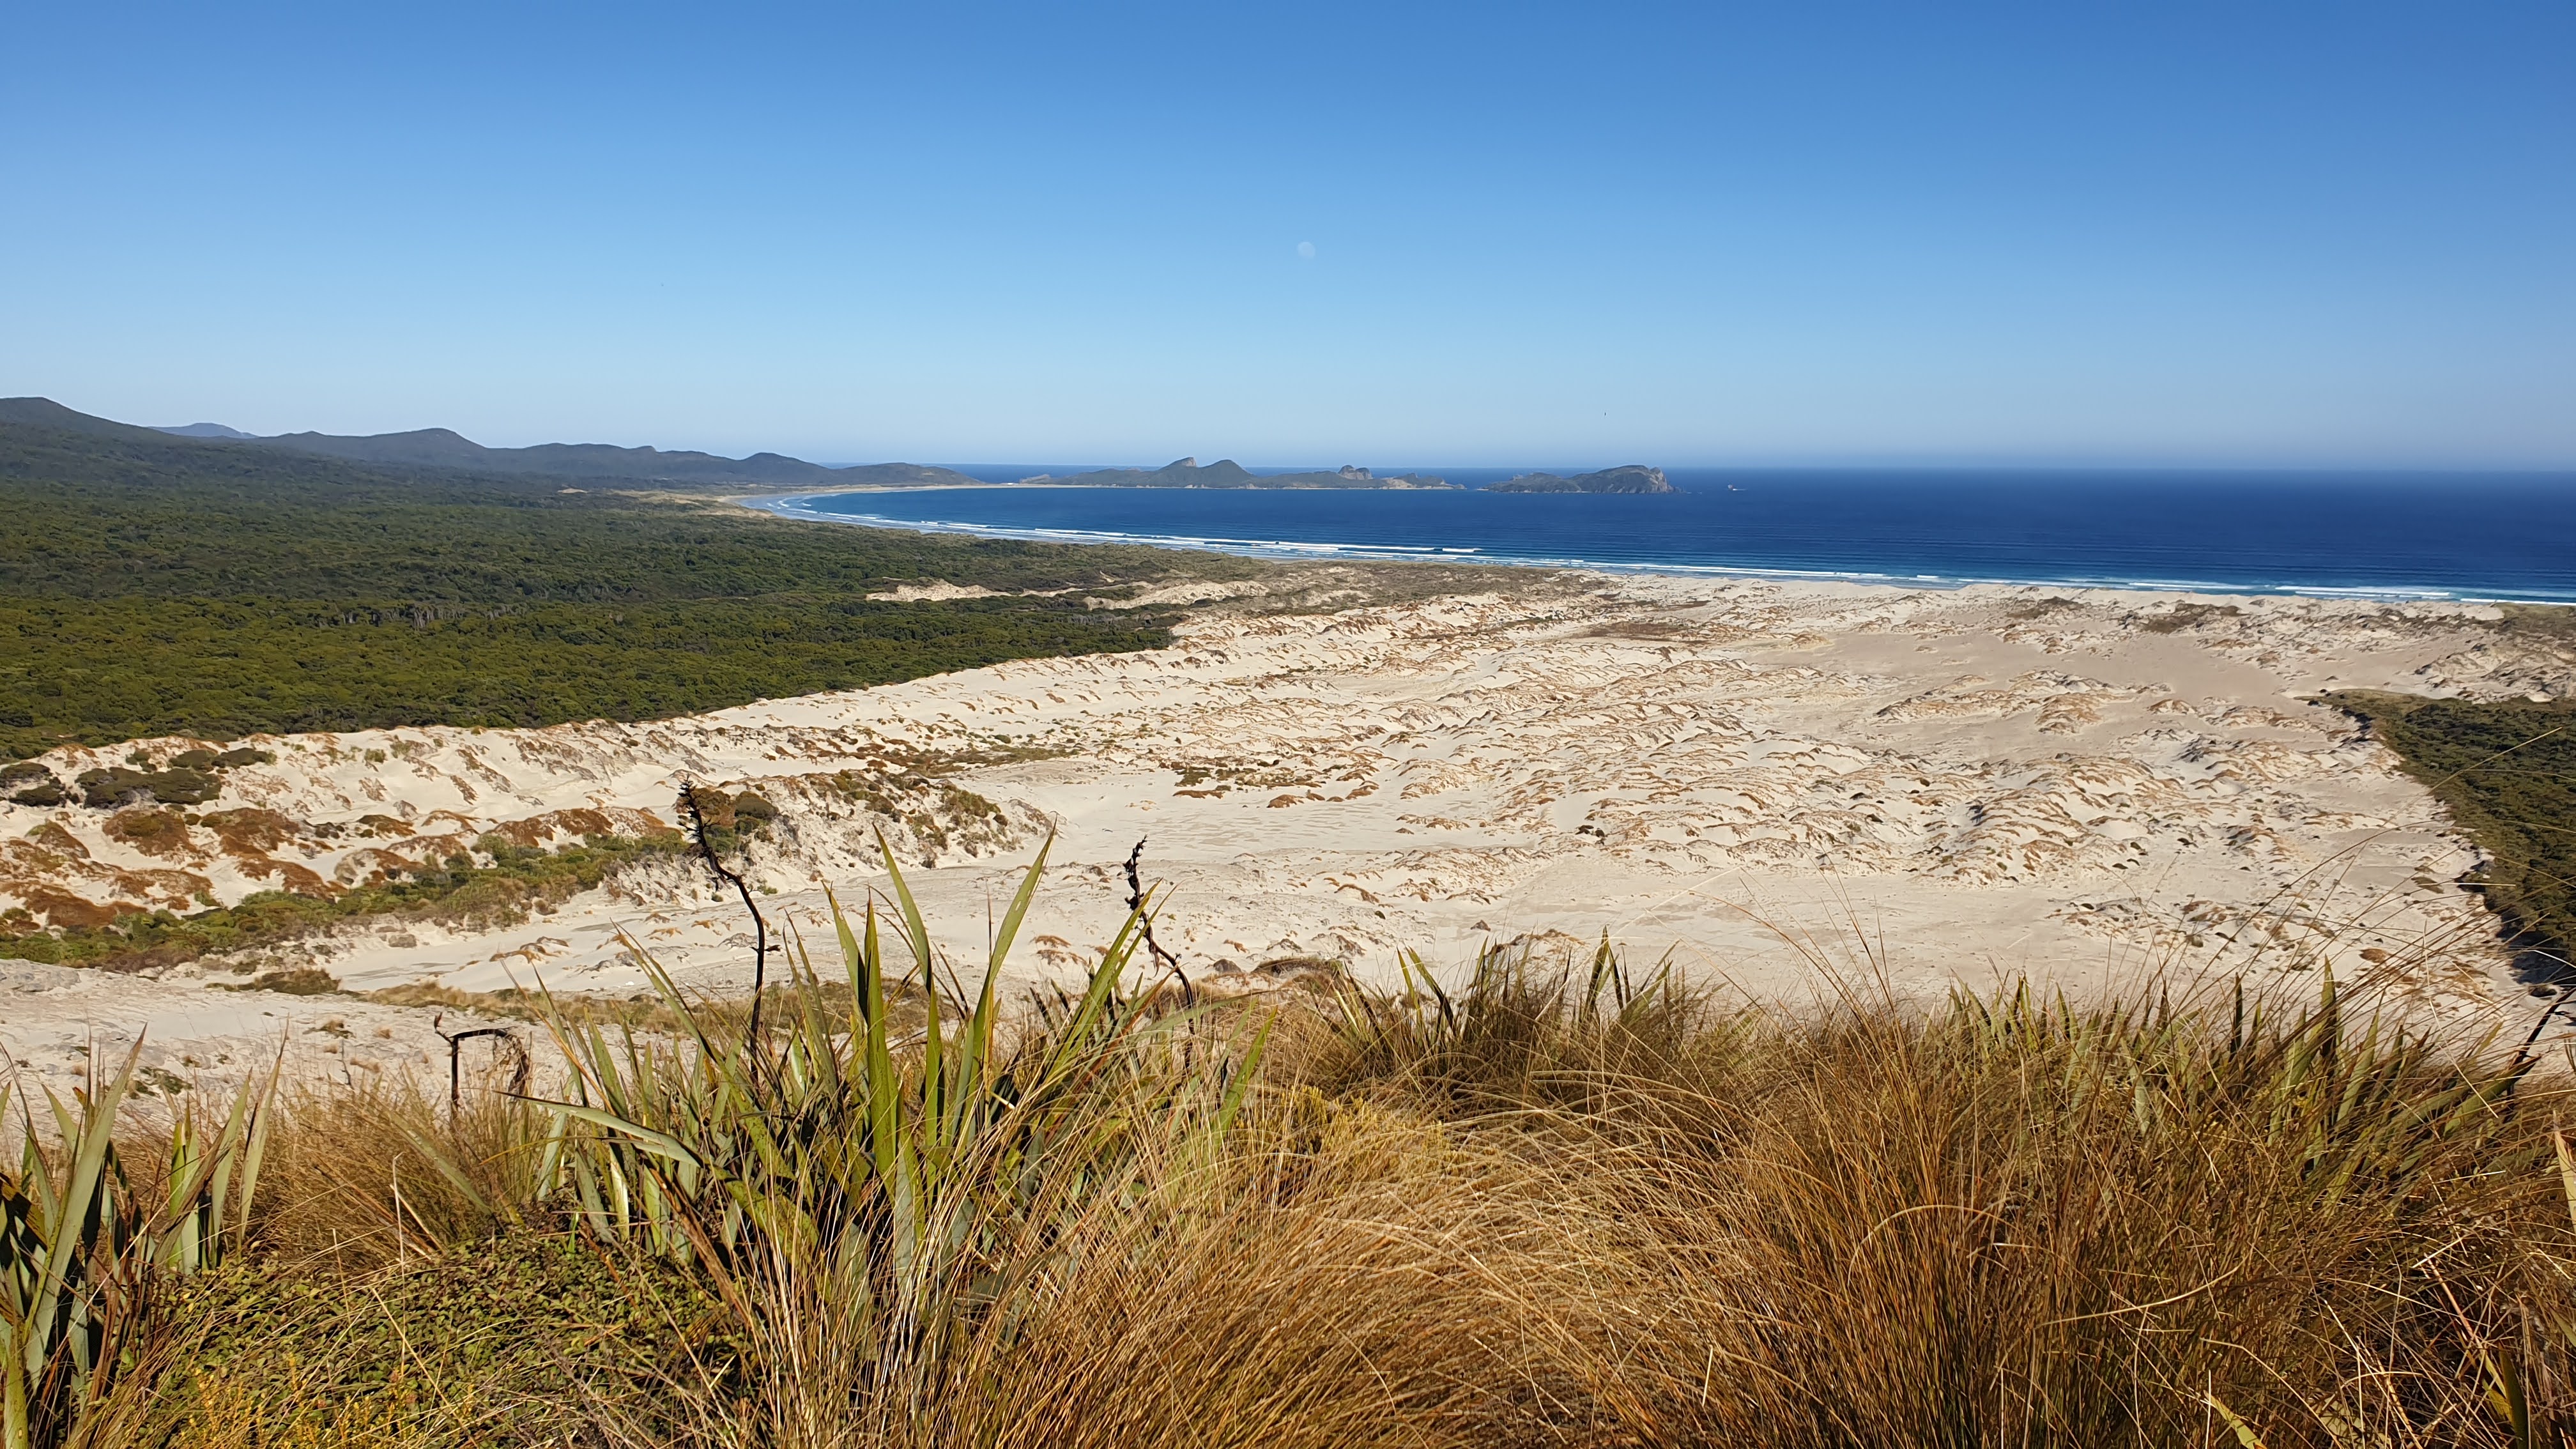 The sand dune system at Mason Bay